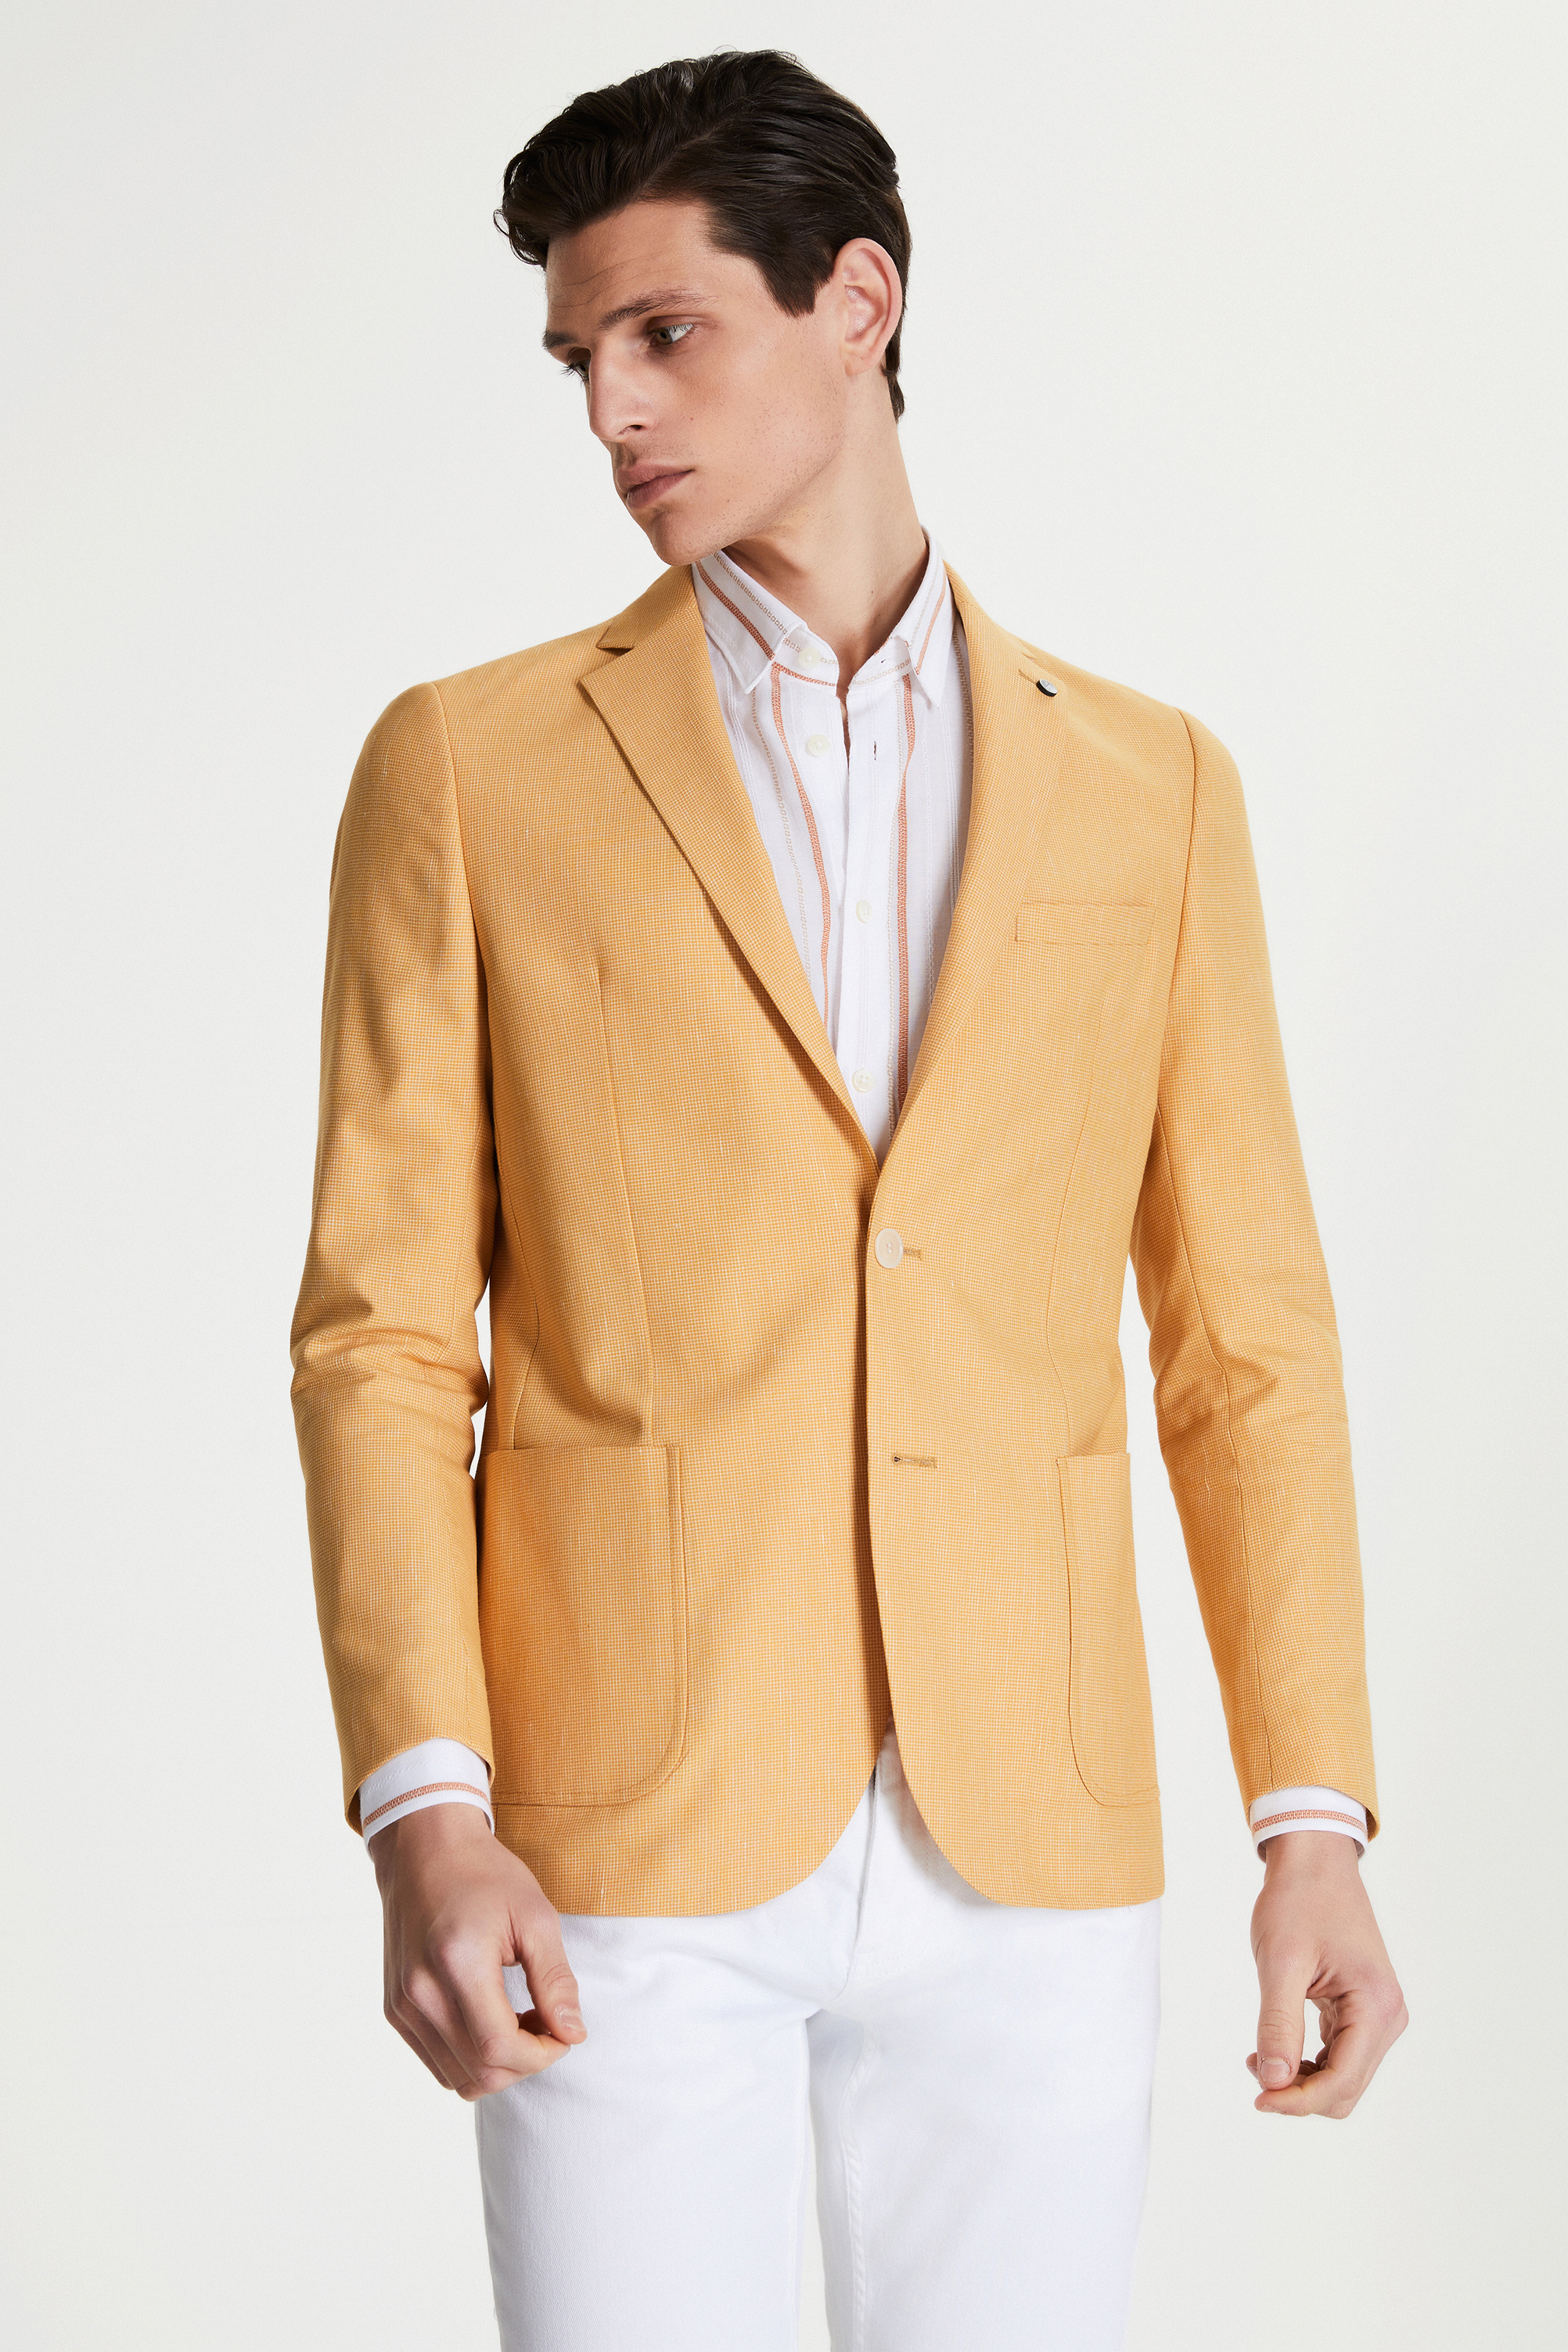 Damat Tween Tween Slim Fit Sarı Desenli Kumaş Ceket. 1